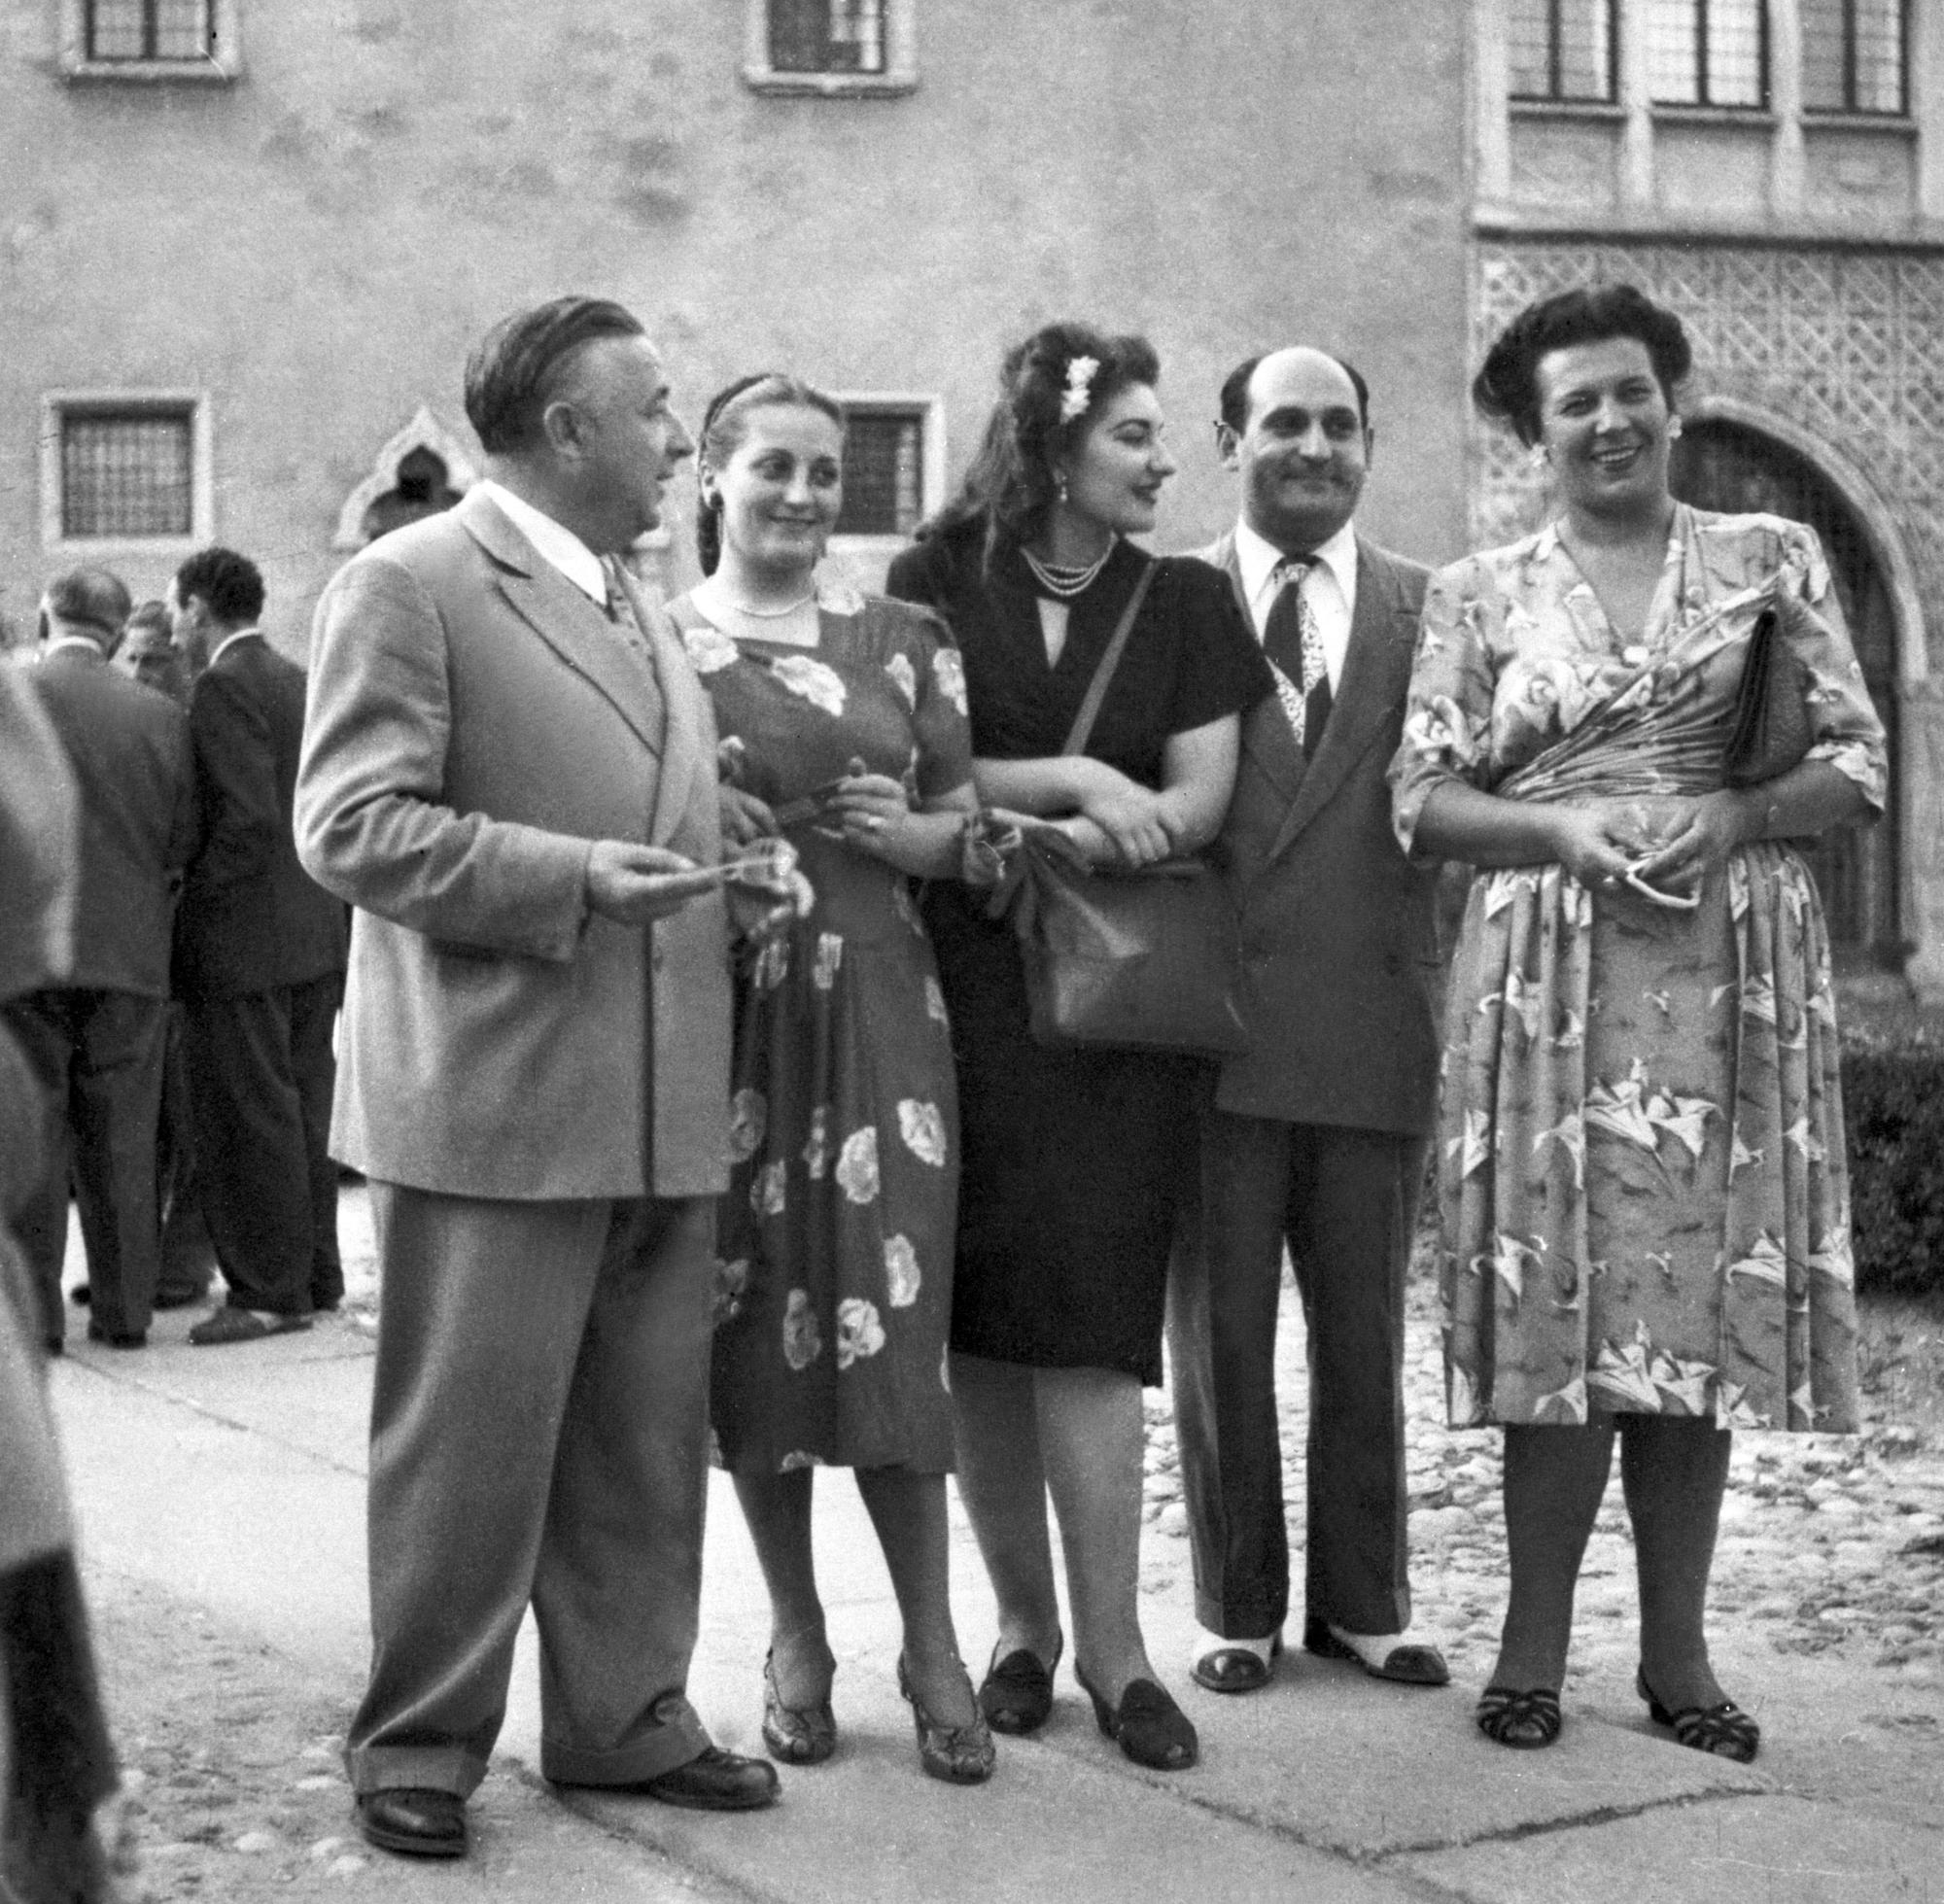 Maria Callas lors de ses débuts aux arènes de Vérone dans "La Gioconda" de Ponchielli en 1947. De gauche à droite Tullio Serafin, les sopranos Maria Luisa Cioni, Maria Callas et Renata Tebaldi. [AFP]